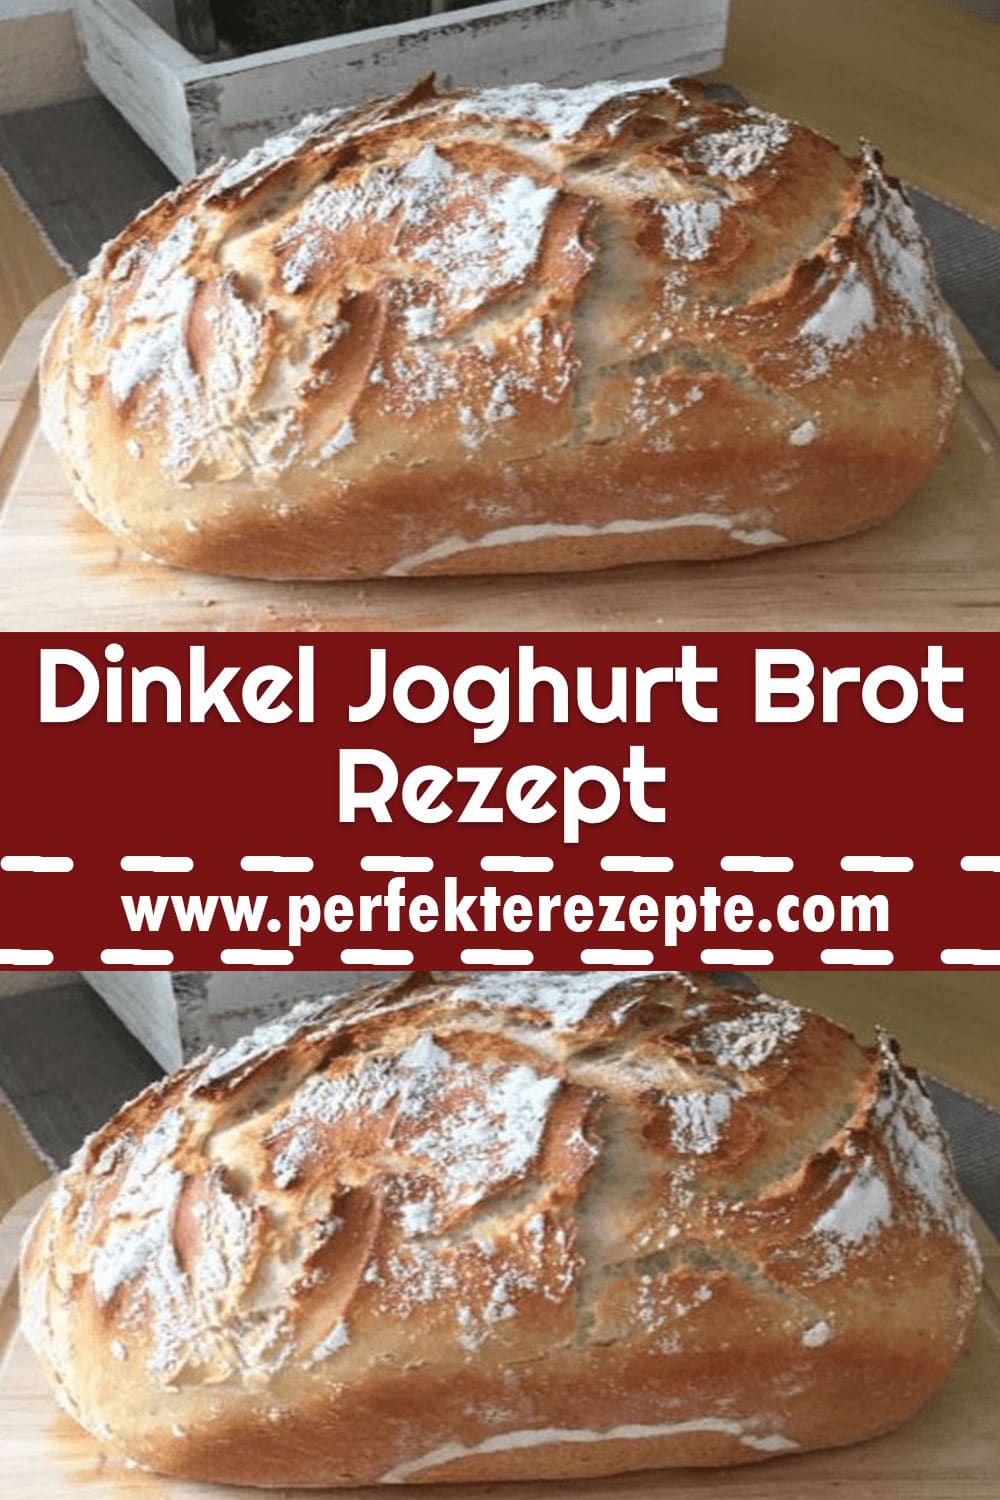 Dinkel Joghurt Brot Rezept